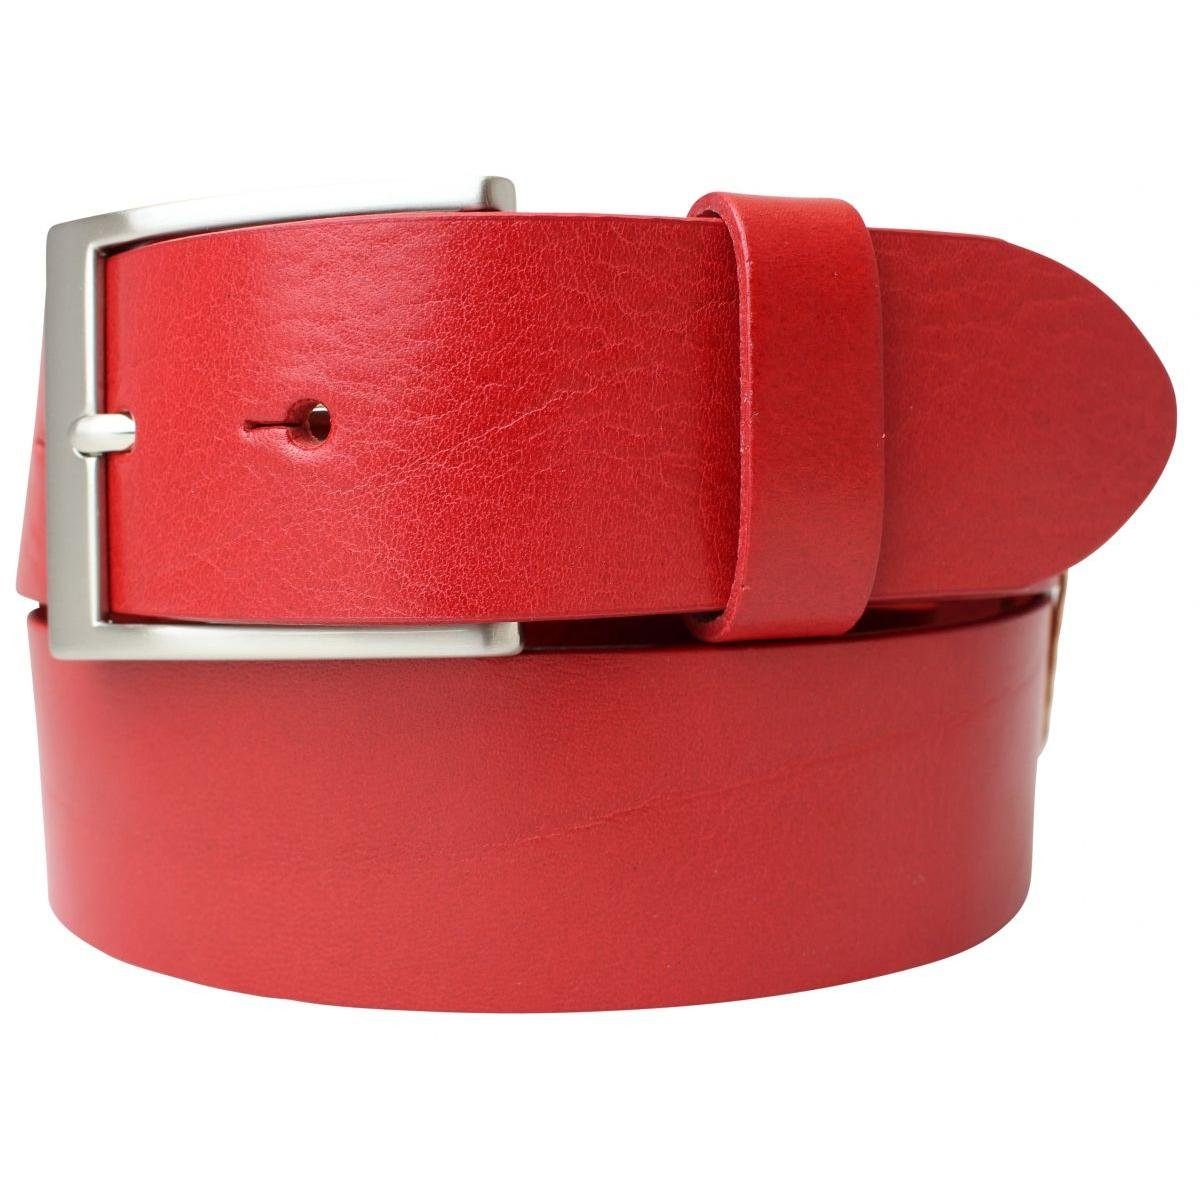 für Hochwertiger BELTINGER - cm 4 Vollrindleder He Ledergürtel Leder-Gürtel Rot, Silber aus Jeans-Gürtel